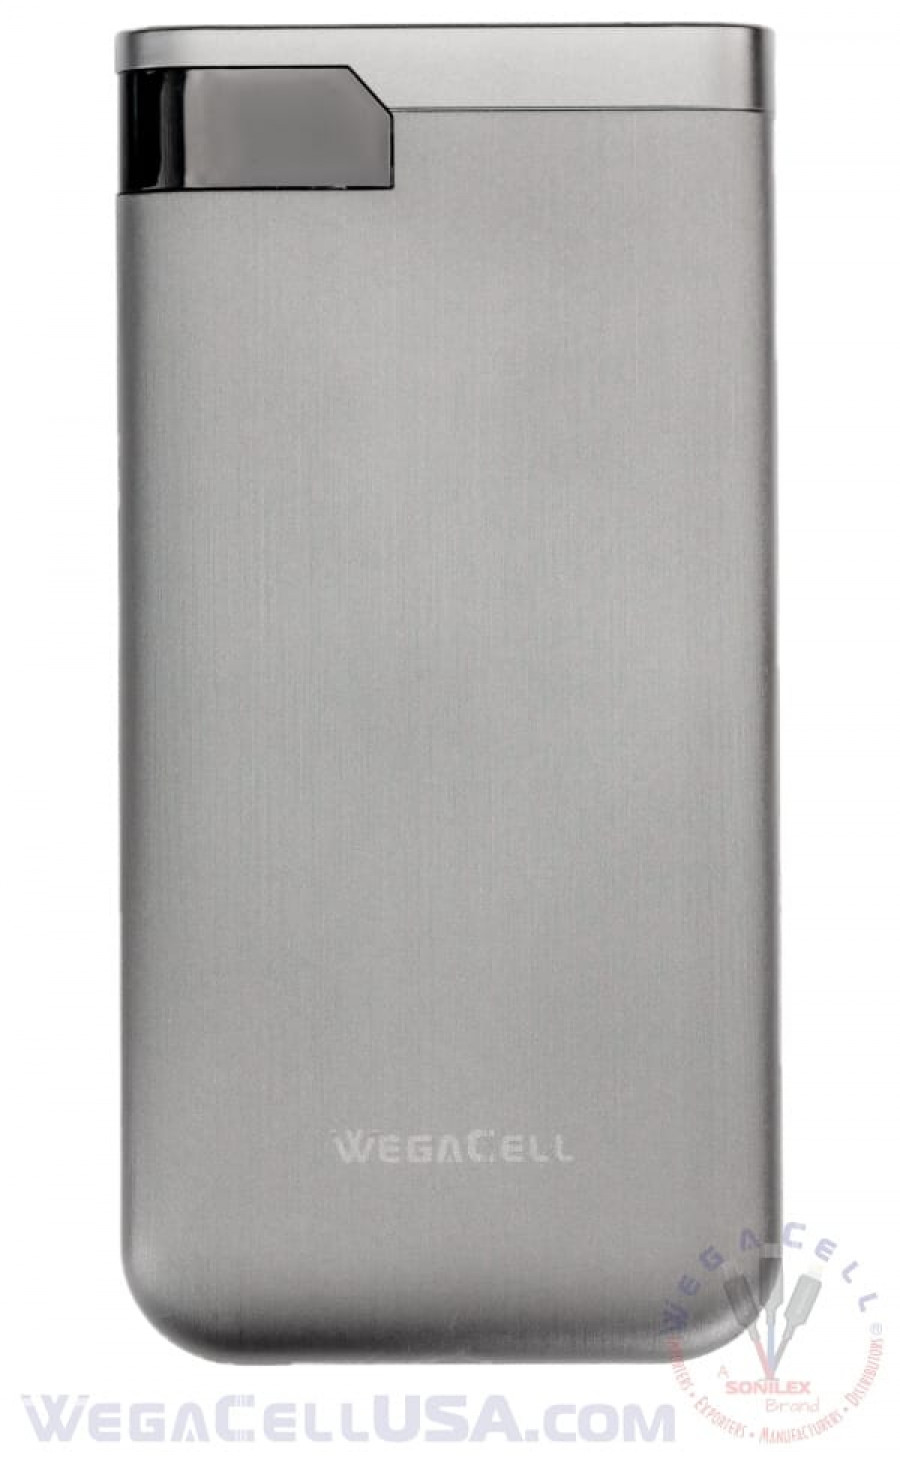 8000 mah power bank fast charging lithium-polymer portable battery pack - wholesale pkg. wegacell: wl-2usb14-pb powerbank 24